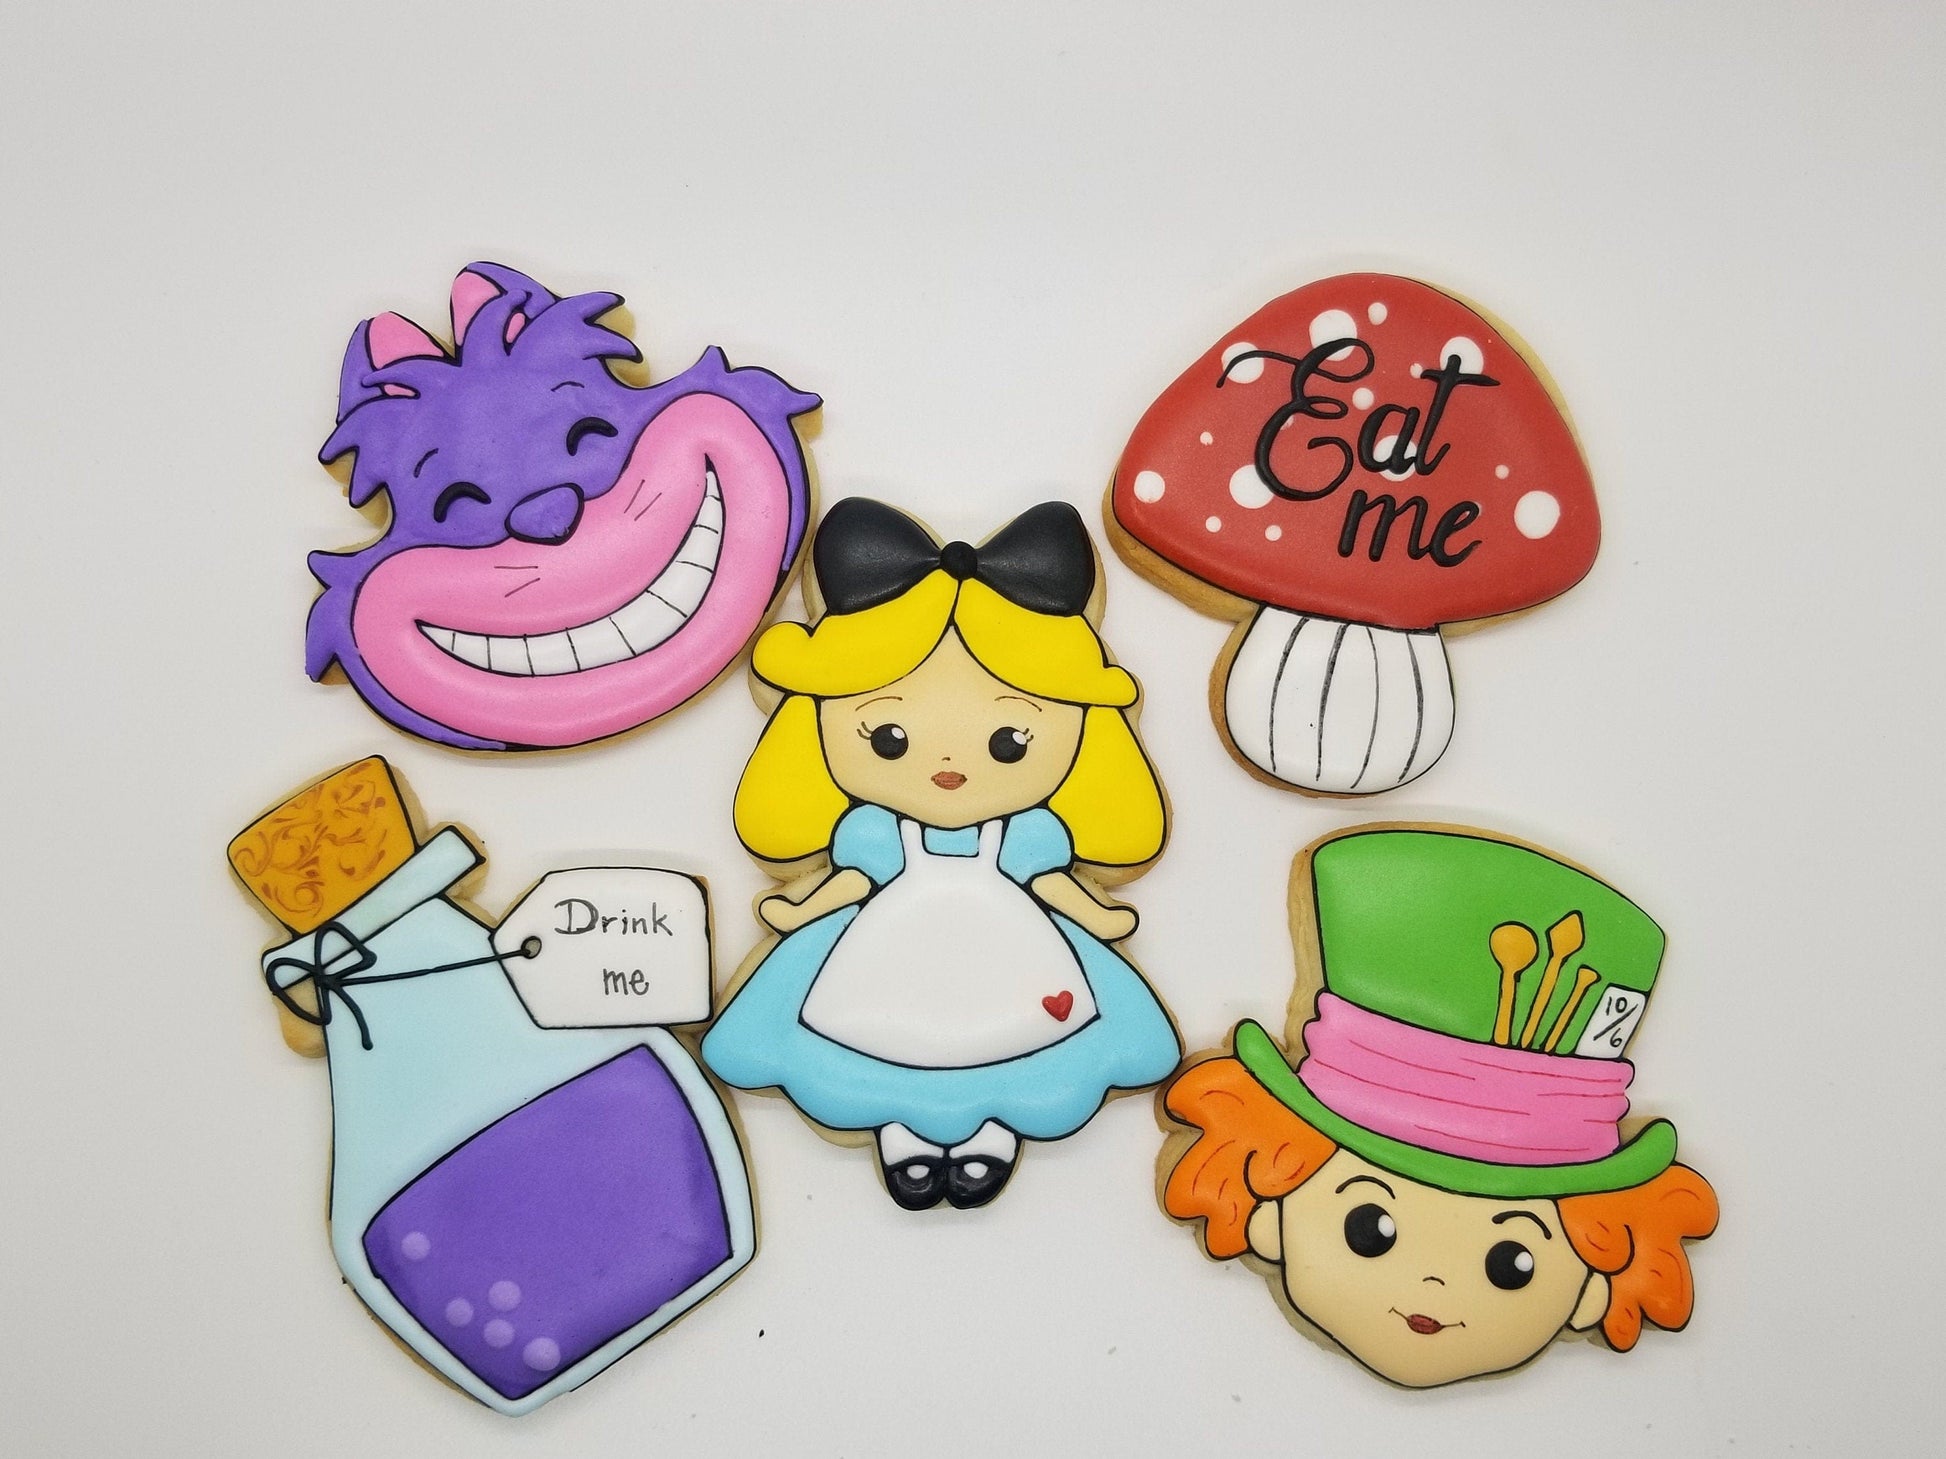 Alice in wonderland cookies (Inspired) One Dozen (12) - Ladybug bake shop